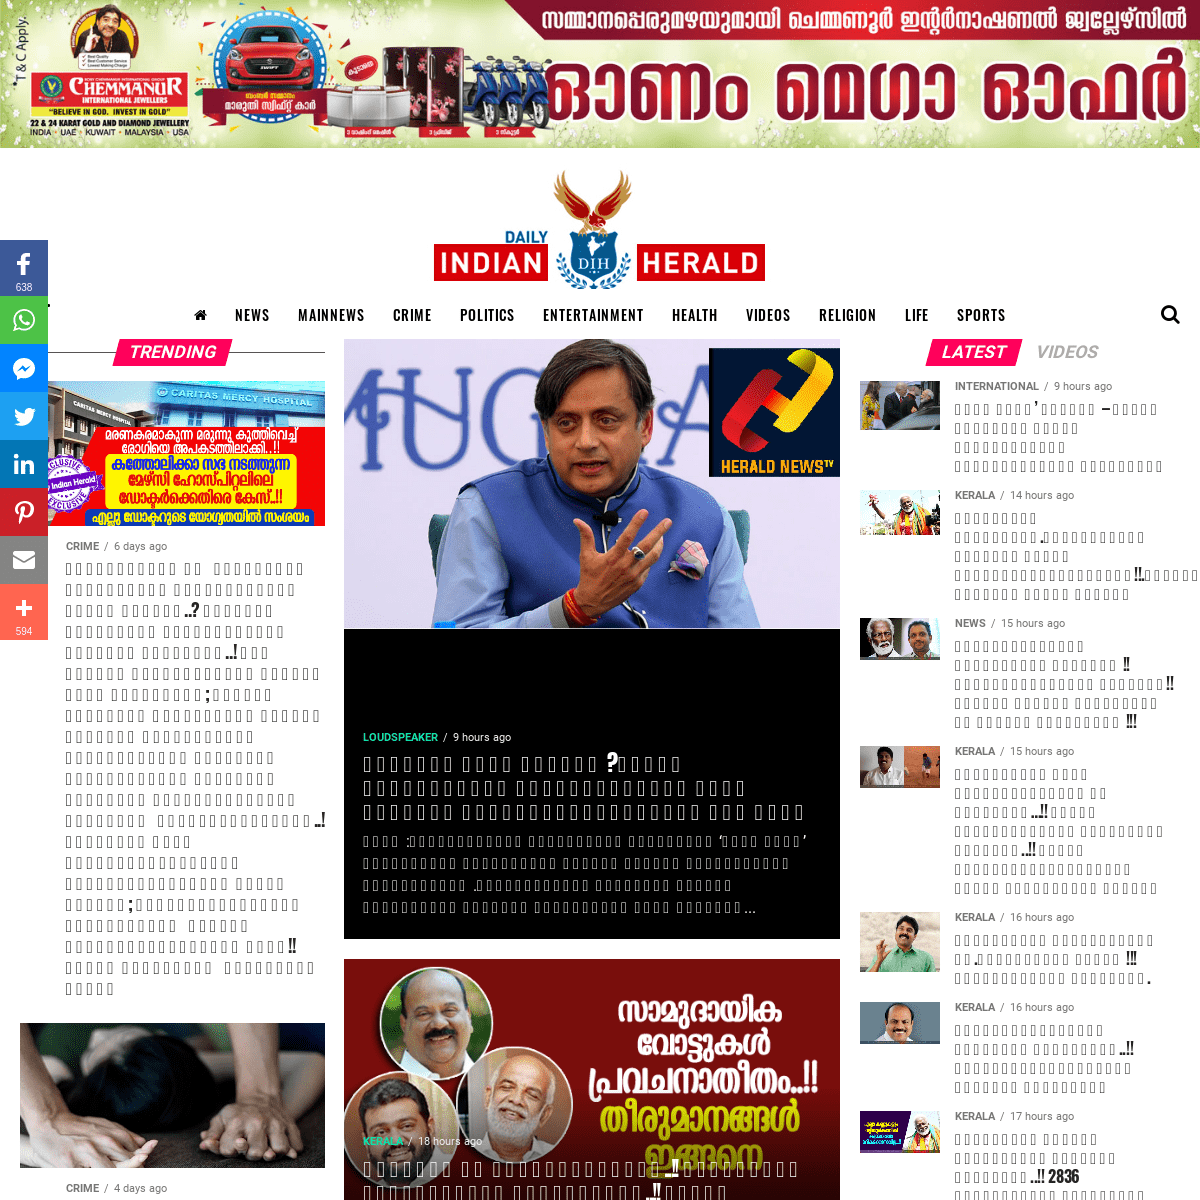 Daily Indian Herald - Malayalam news portal for Malayali’s especially for the Pravasi Malayalees